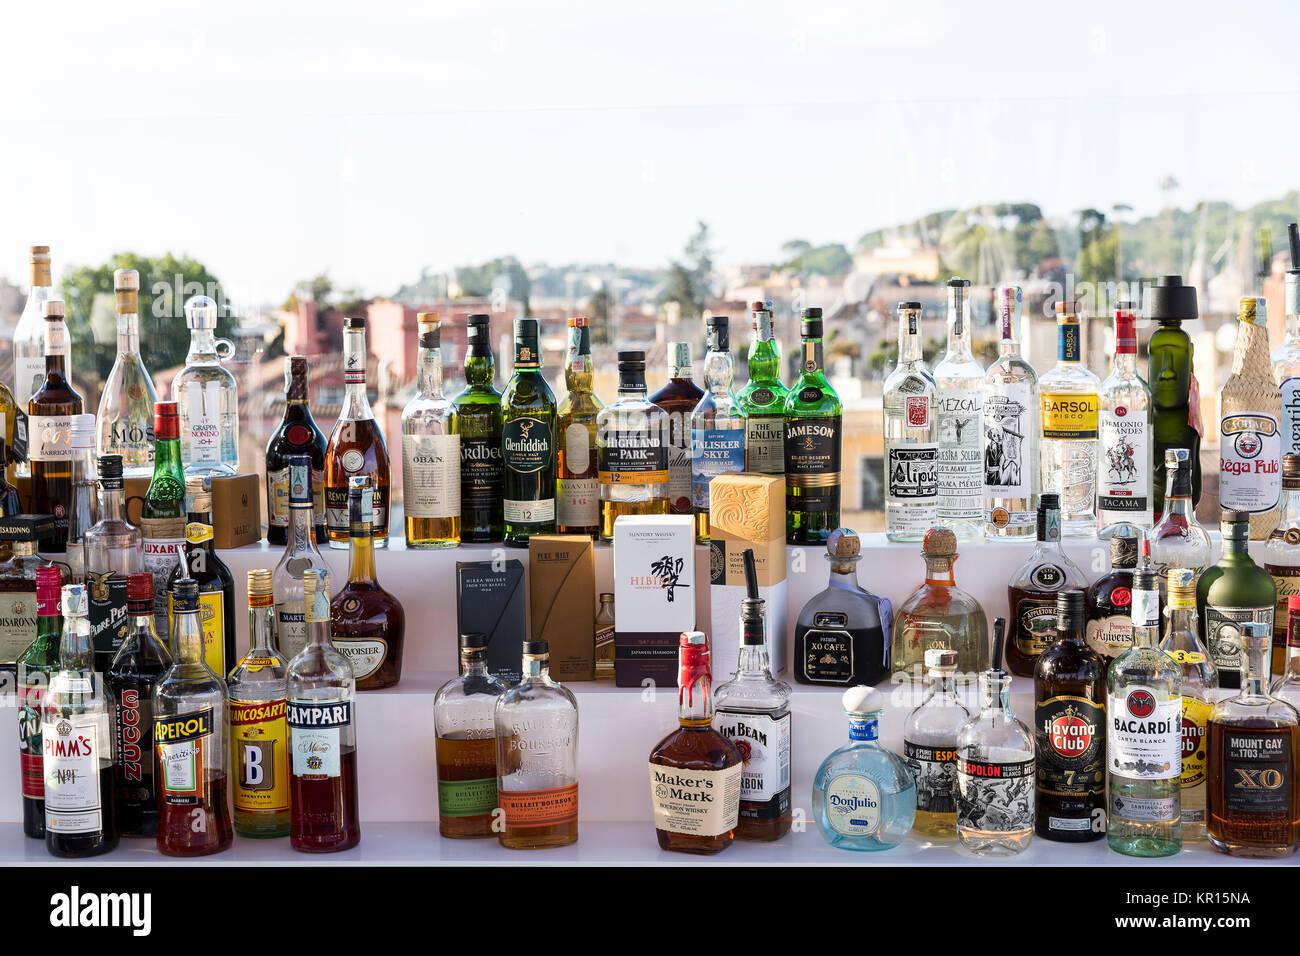 Liquor bottles in an outdoor bar Stock Photo